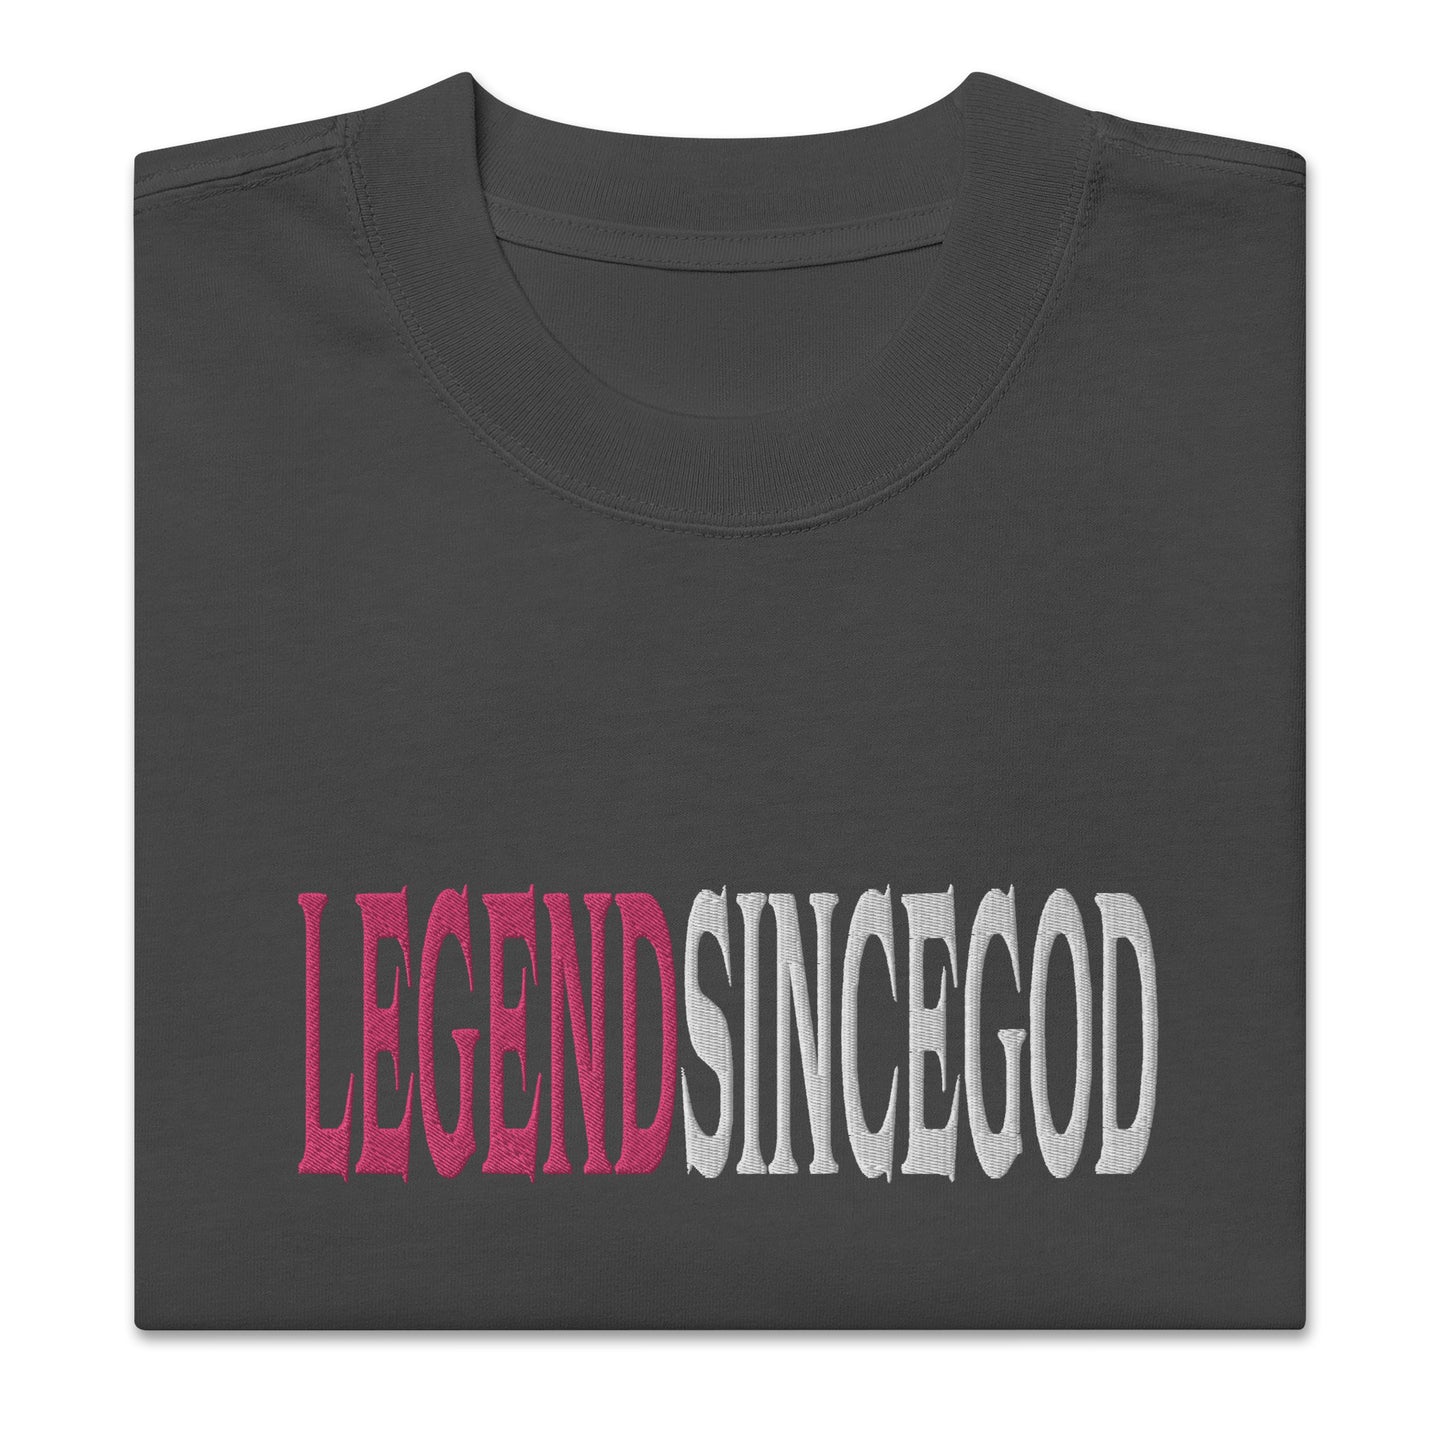 Legend Since God | Oversized T-shirt | Faded Black | Embroidered